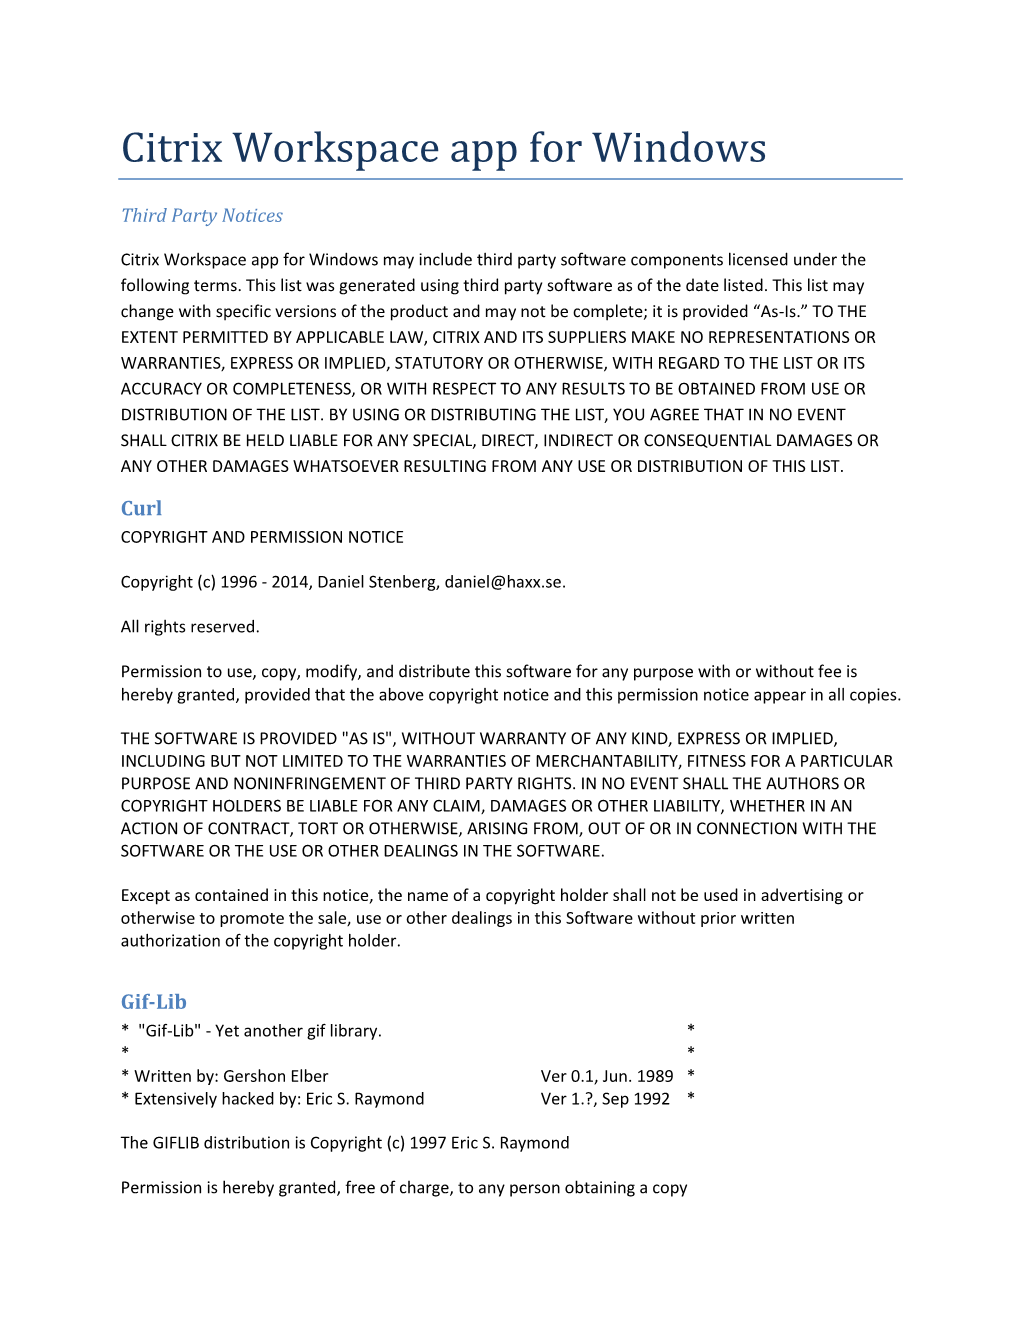 Citrix Workspace App for Windows Third-Party Notices